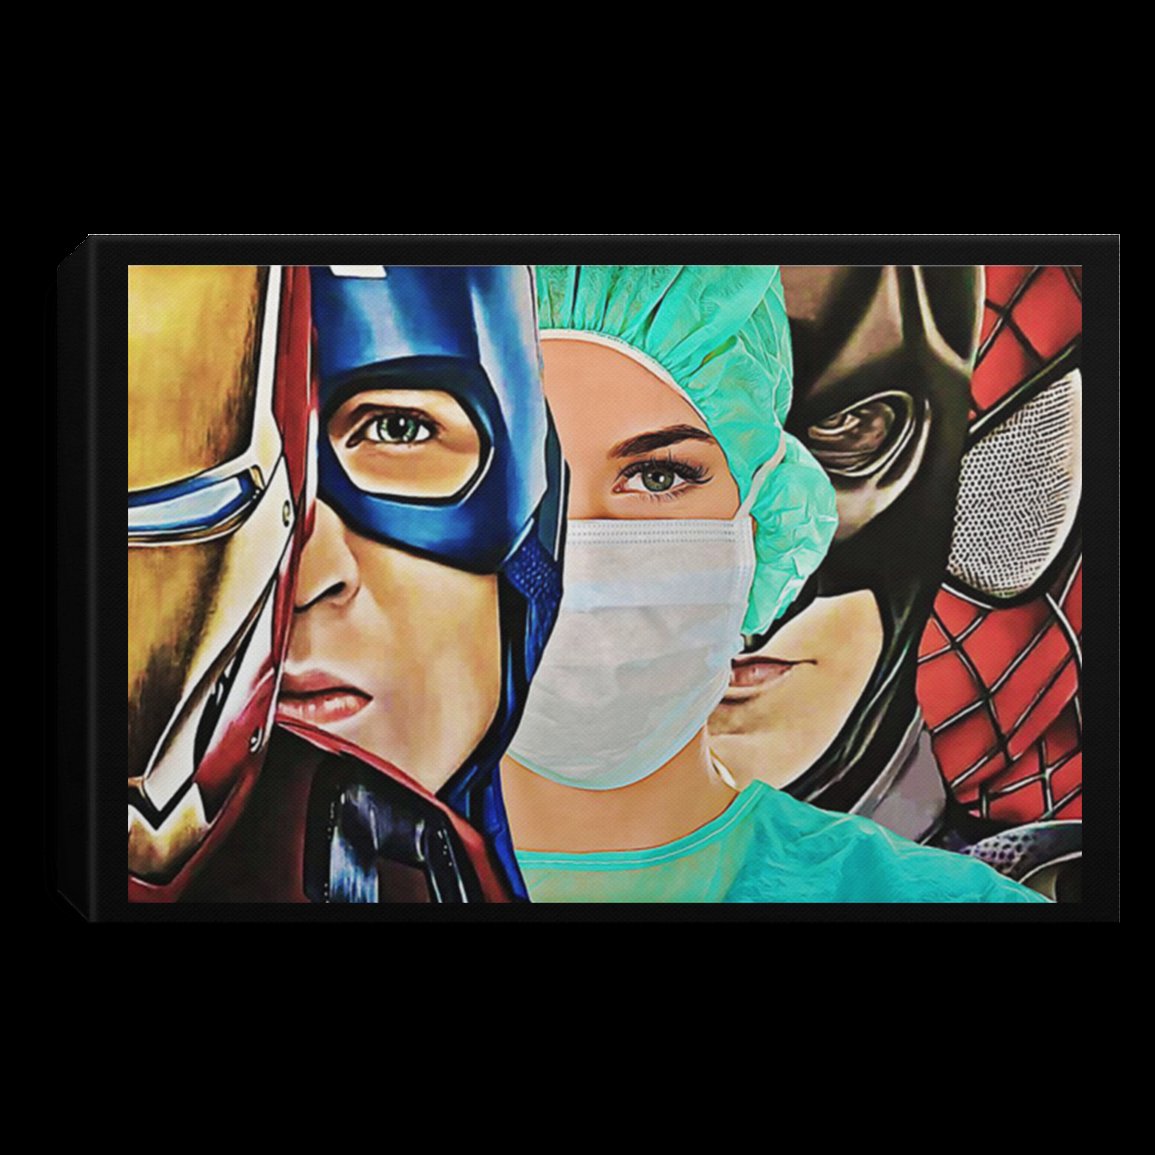 @RegAndy76 @DarkLyalSoul @AmazonGoddessD @heatherrose1814 @pheltzcomics @AnnaOmmen @annedemic @Symb10teCat @WondyRogers Thanks all you #NursesMakeTheDifference #Nurses2020 for being warriors through the #COVID19 pandemic. Thanks for the beautiful art share Reggie. (Fresh download)